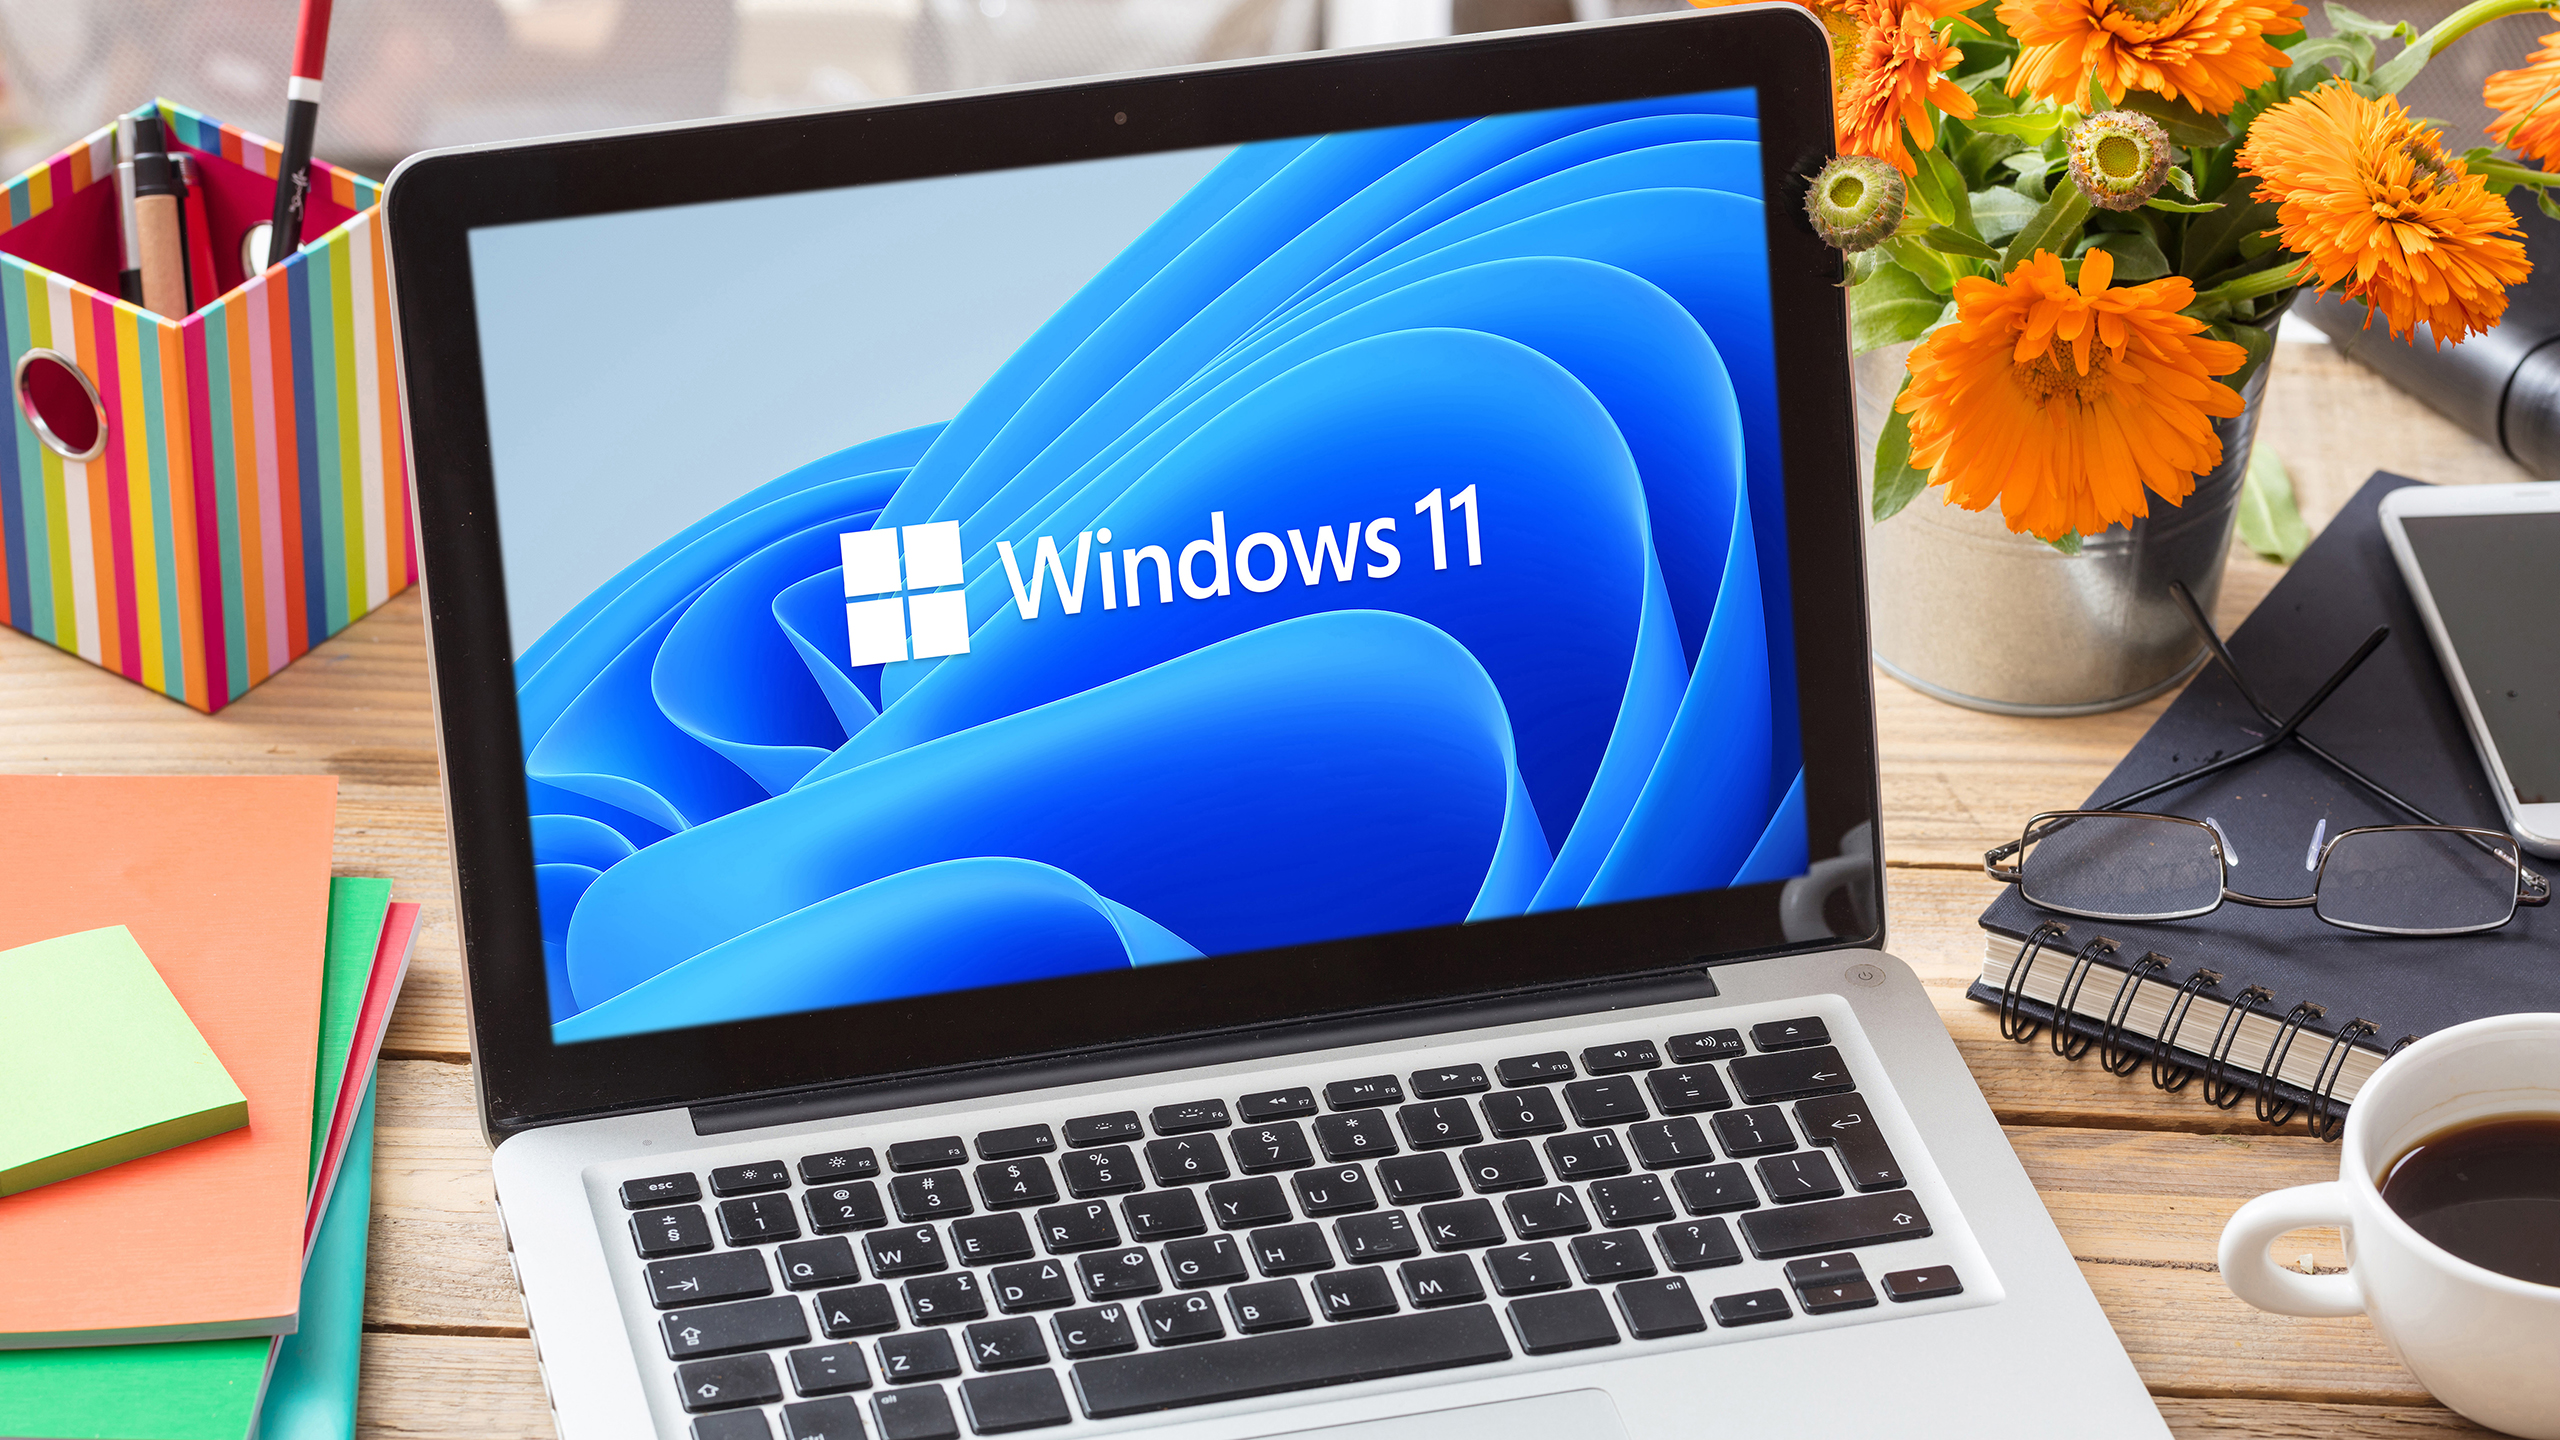 Signo de marca oficial de Windows 11 en la pantalla de la computadora portátil, mesa de oficina comercial